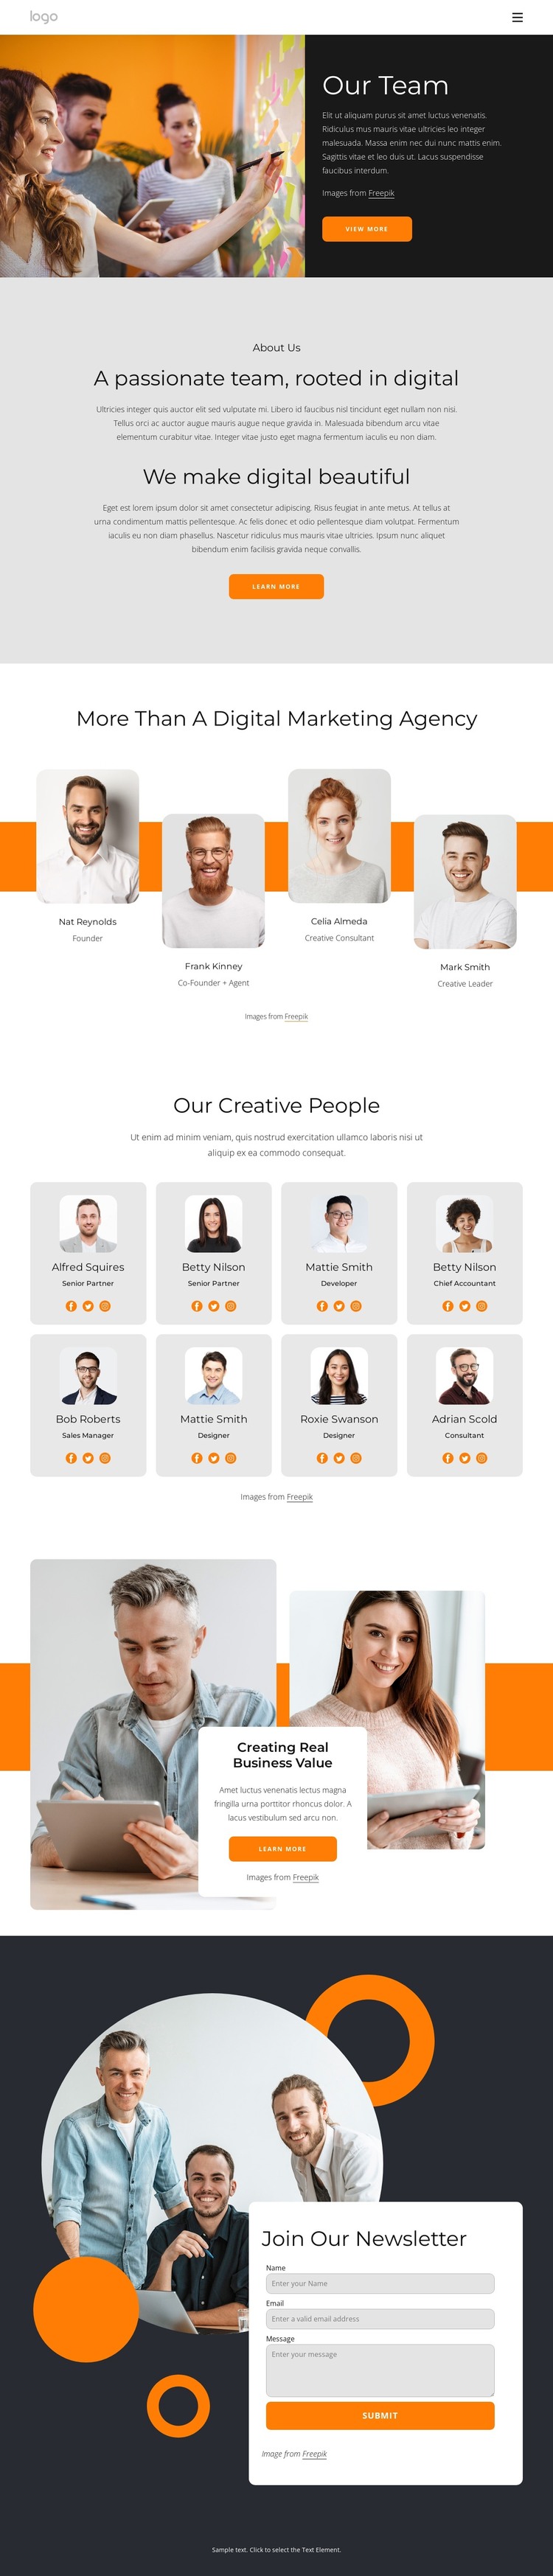 We are creative people with big dreams WordPress Theme